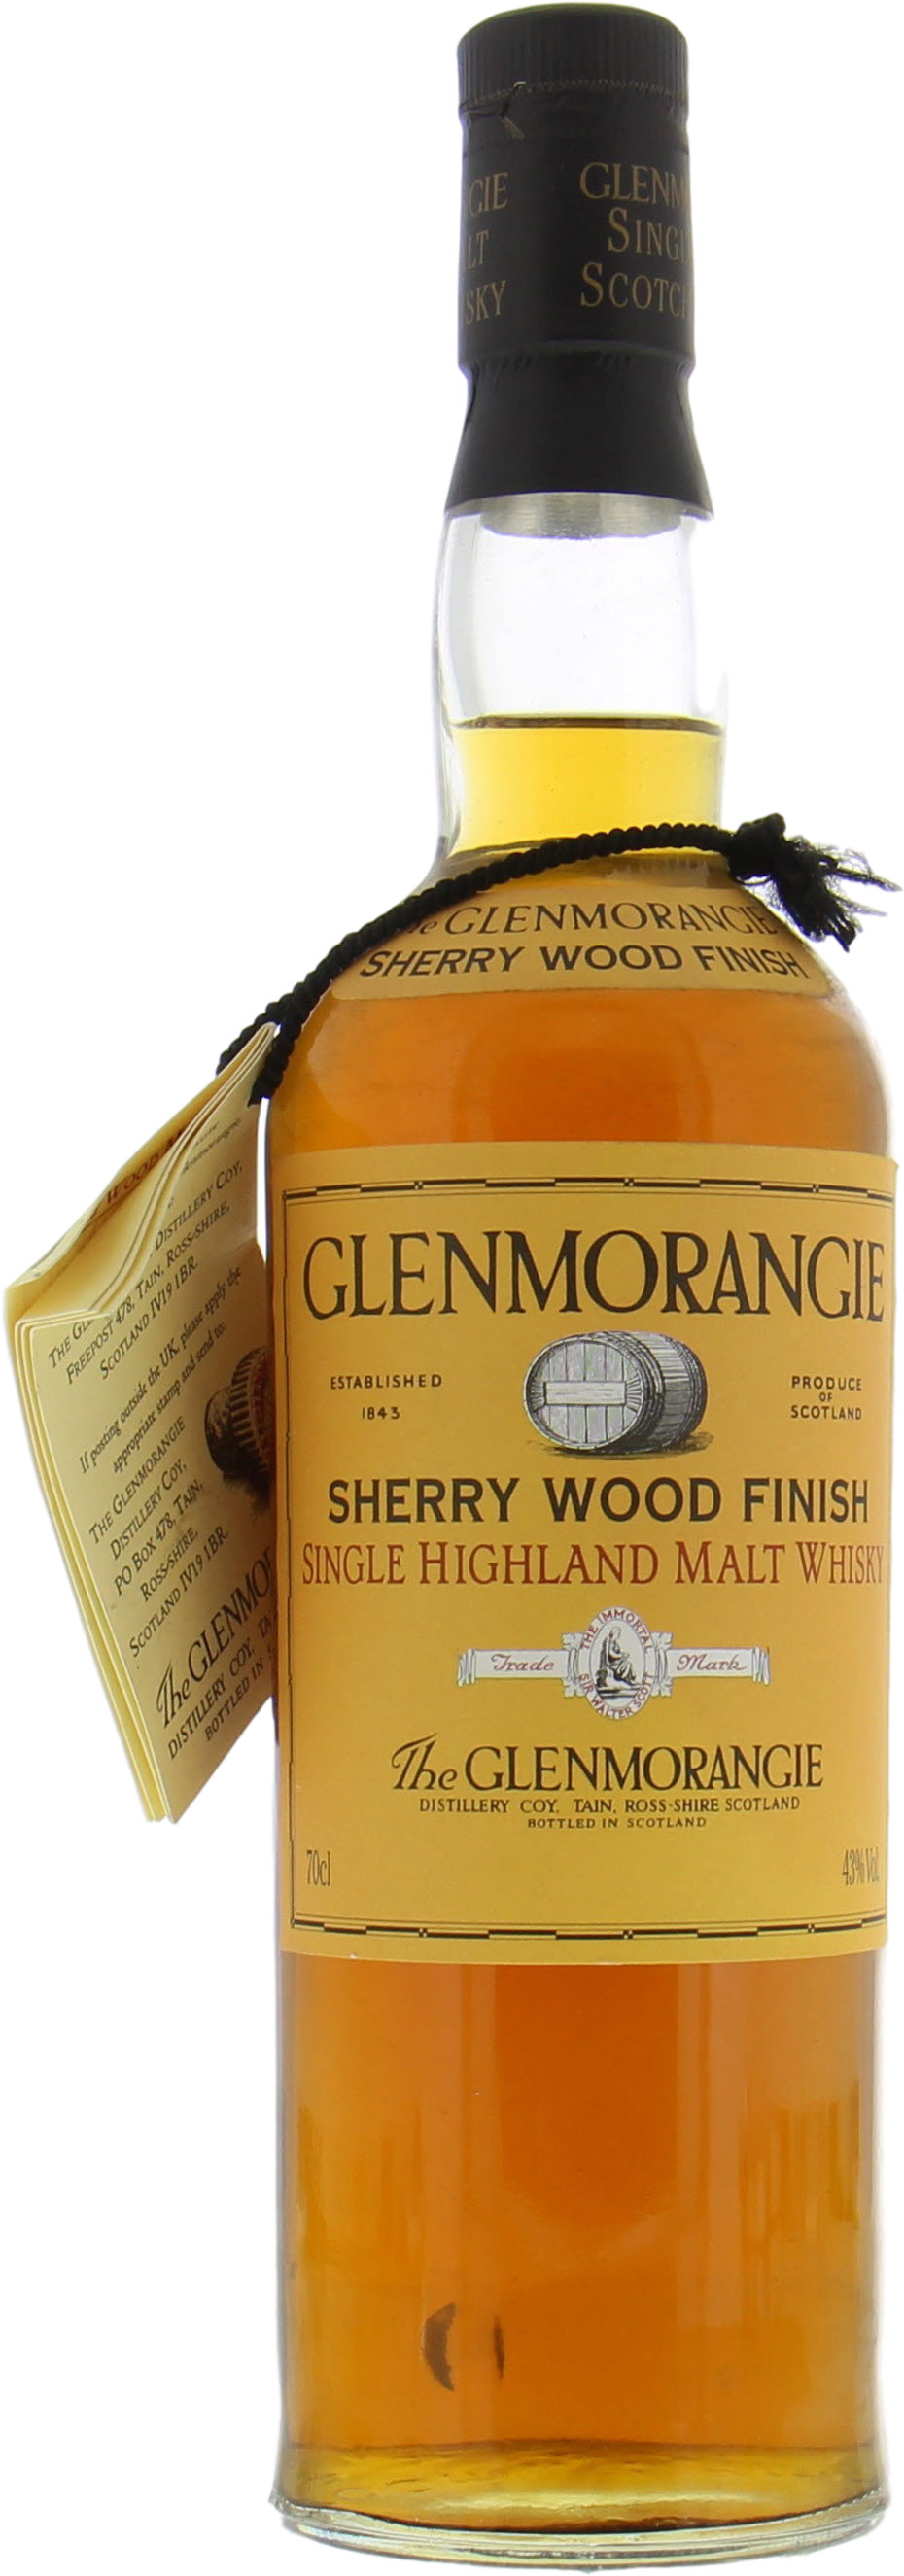 Glenmorangie - Sherry Wood Finish Old Plain (Orange) Label 43% nv No Original Container Included